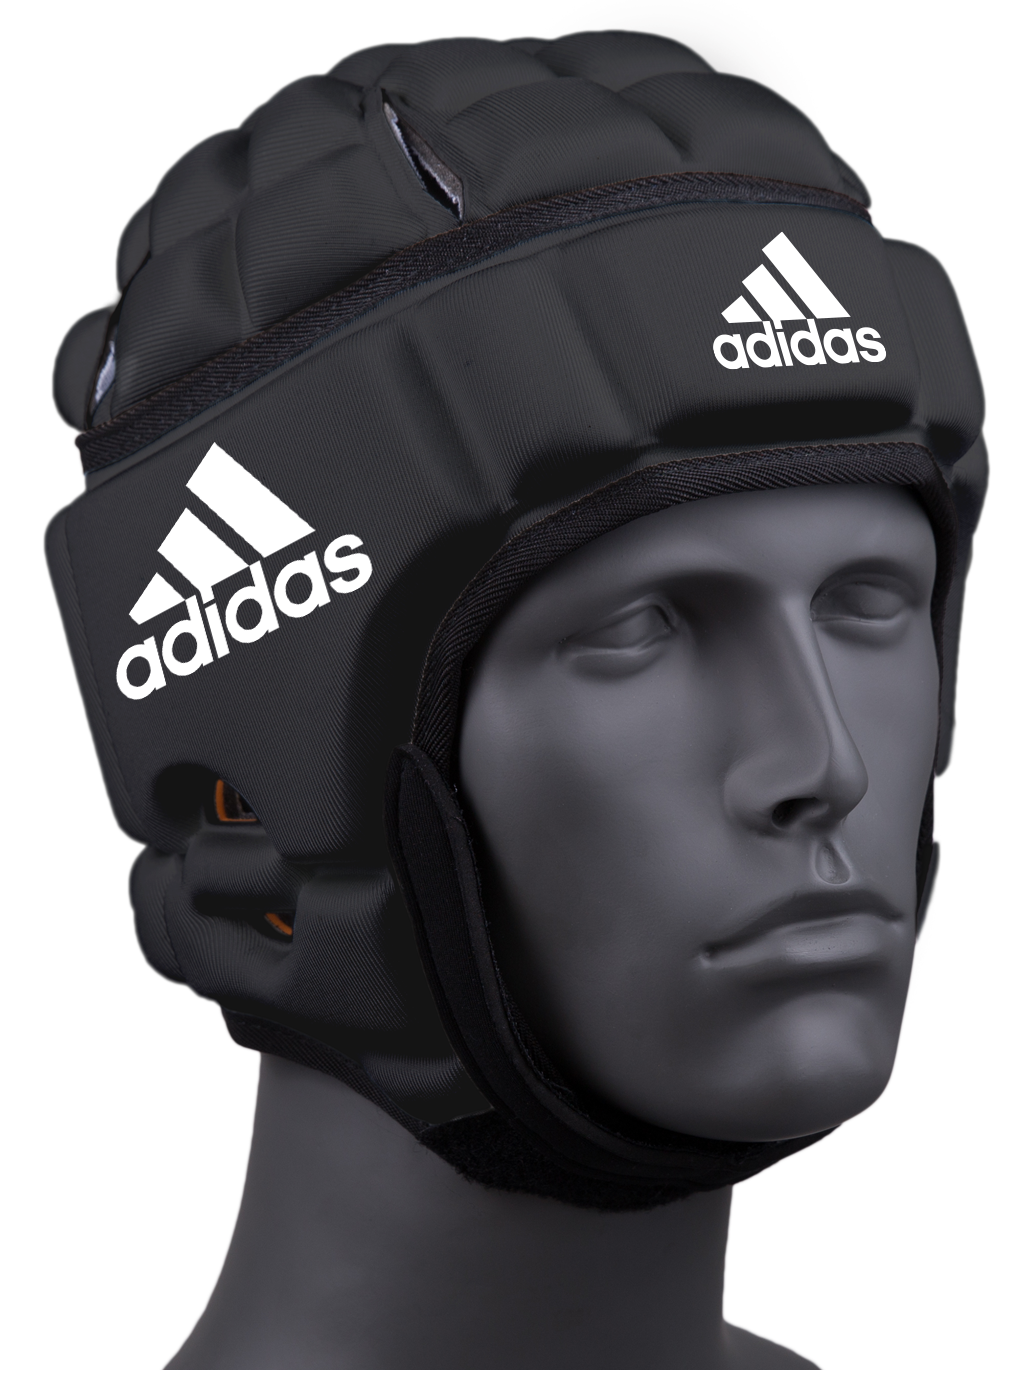 adidas soft shell helmet